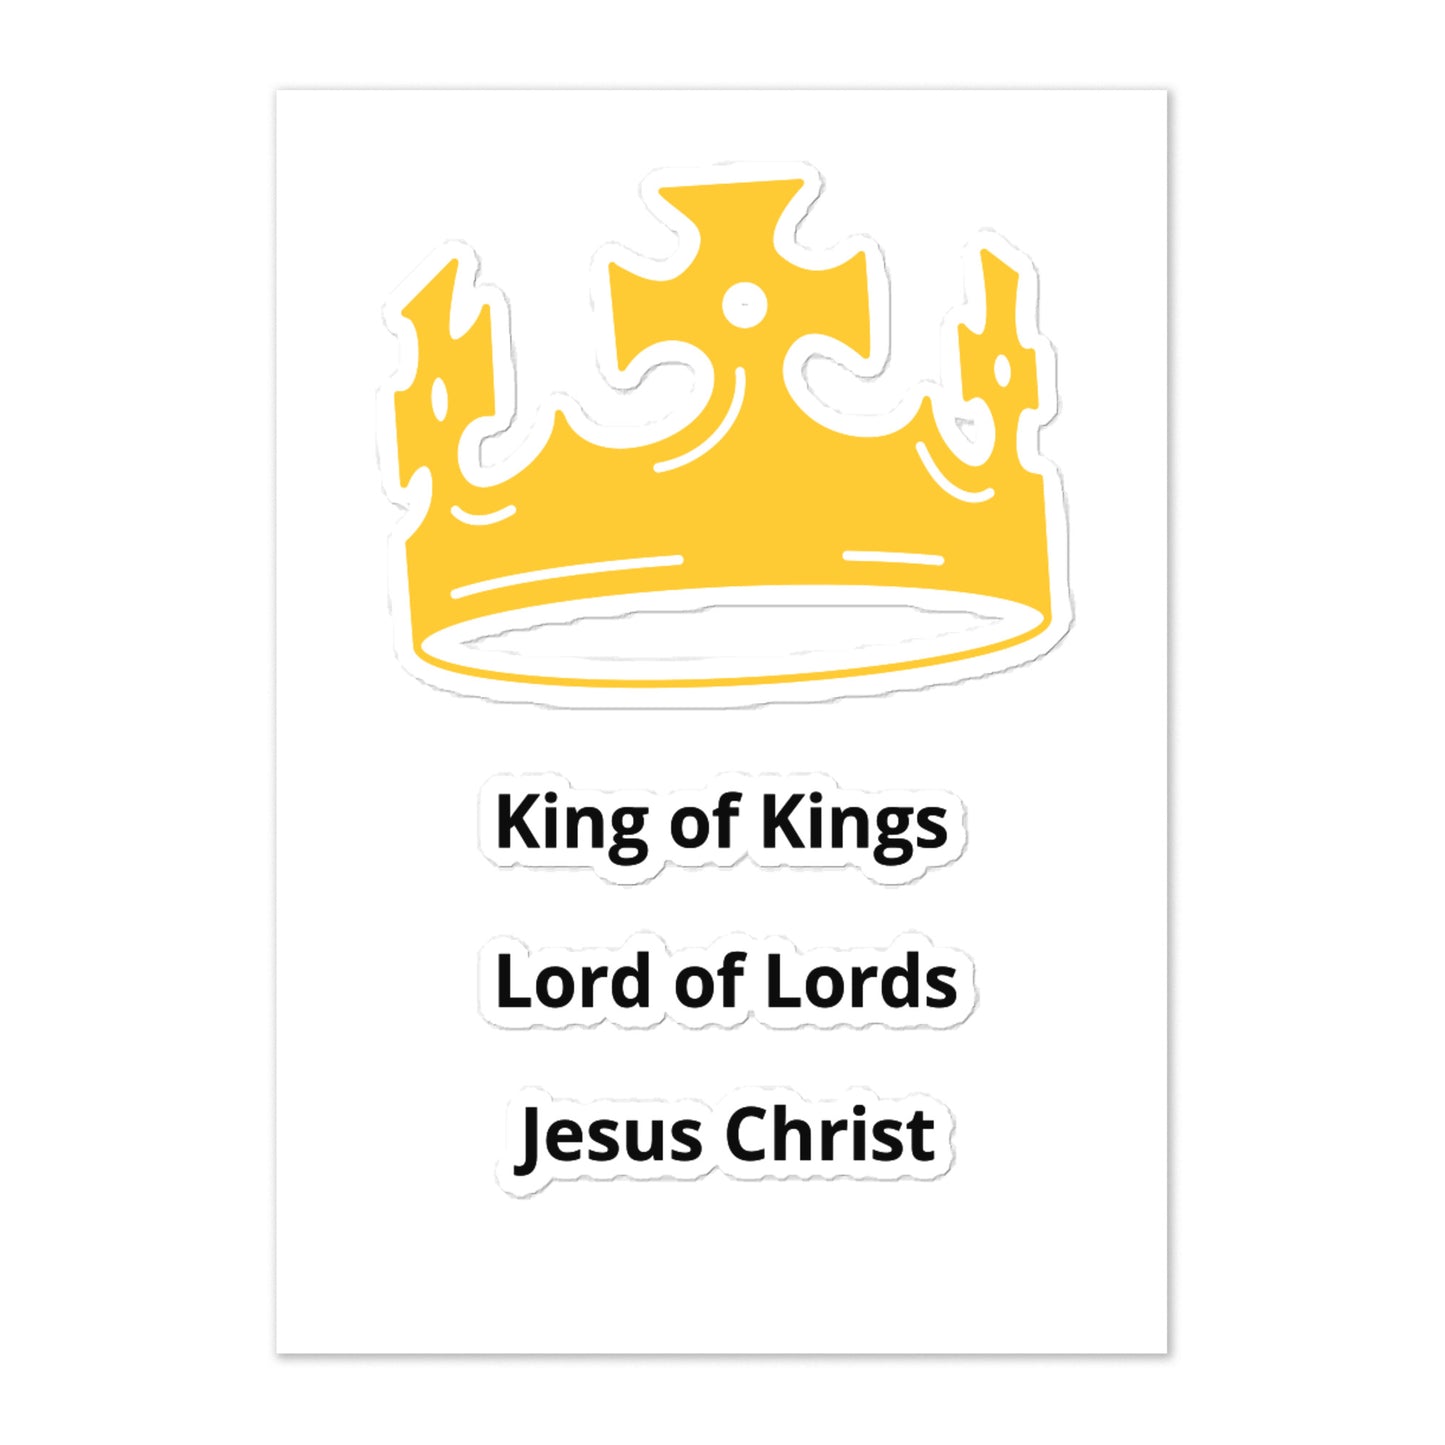 Gold Crown Sticker Sheet